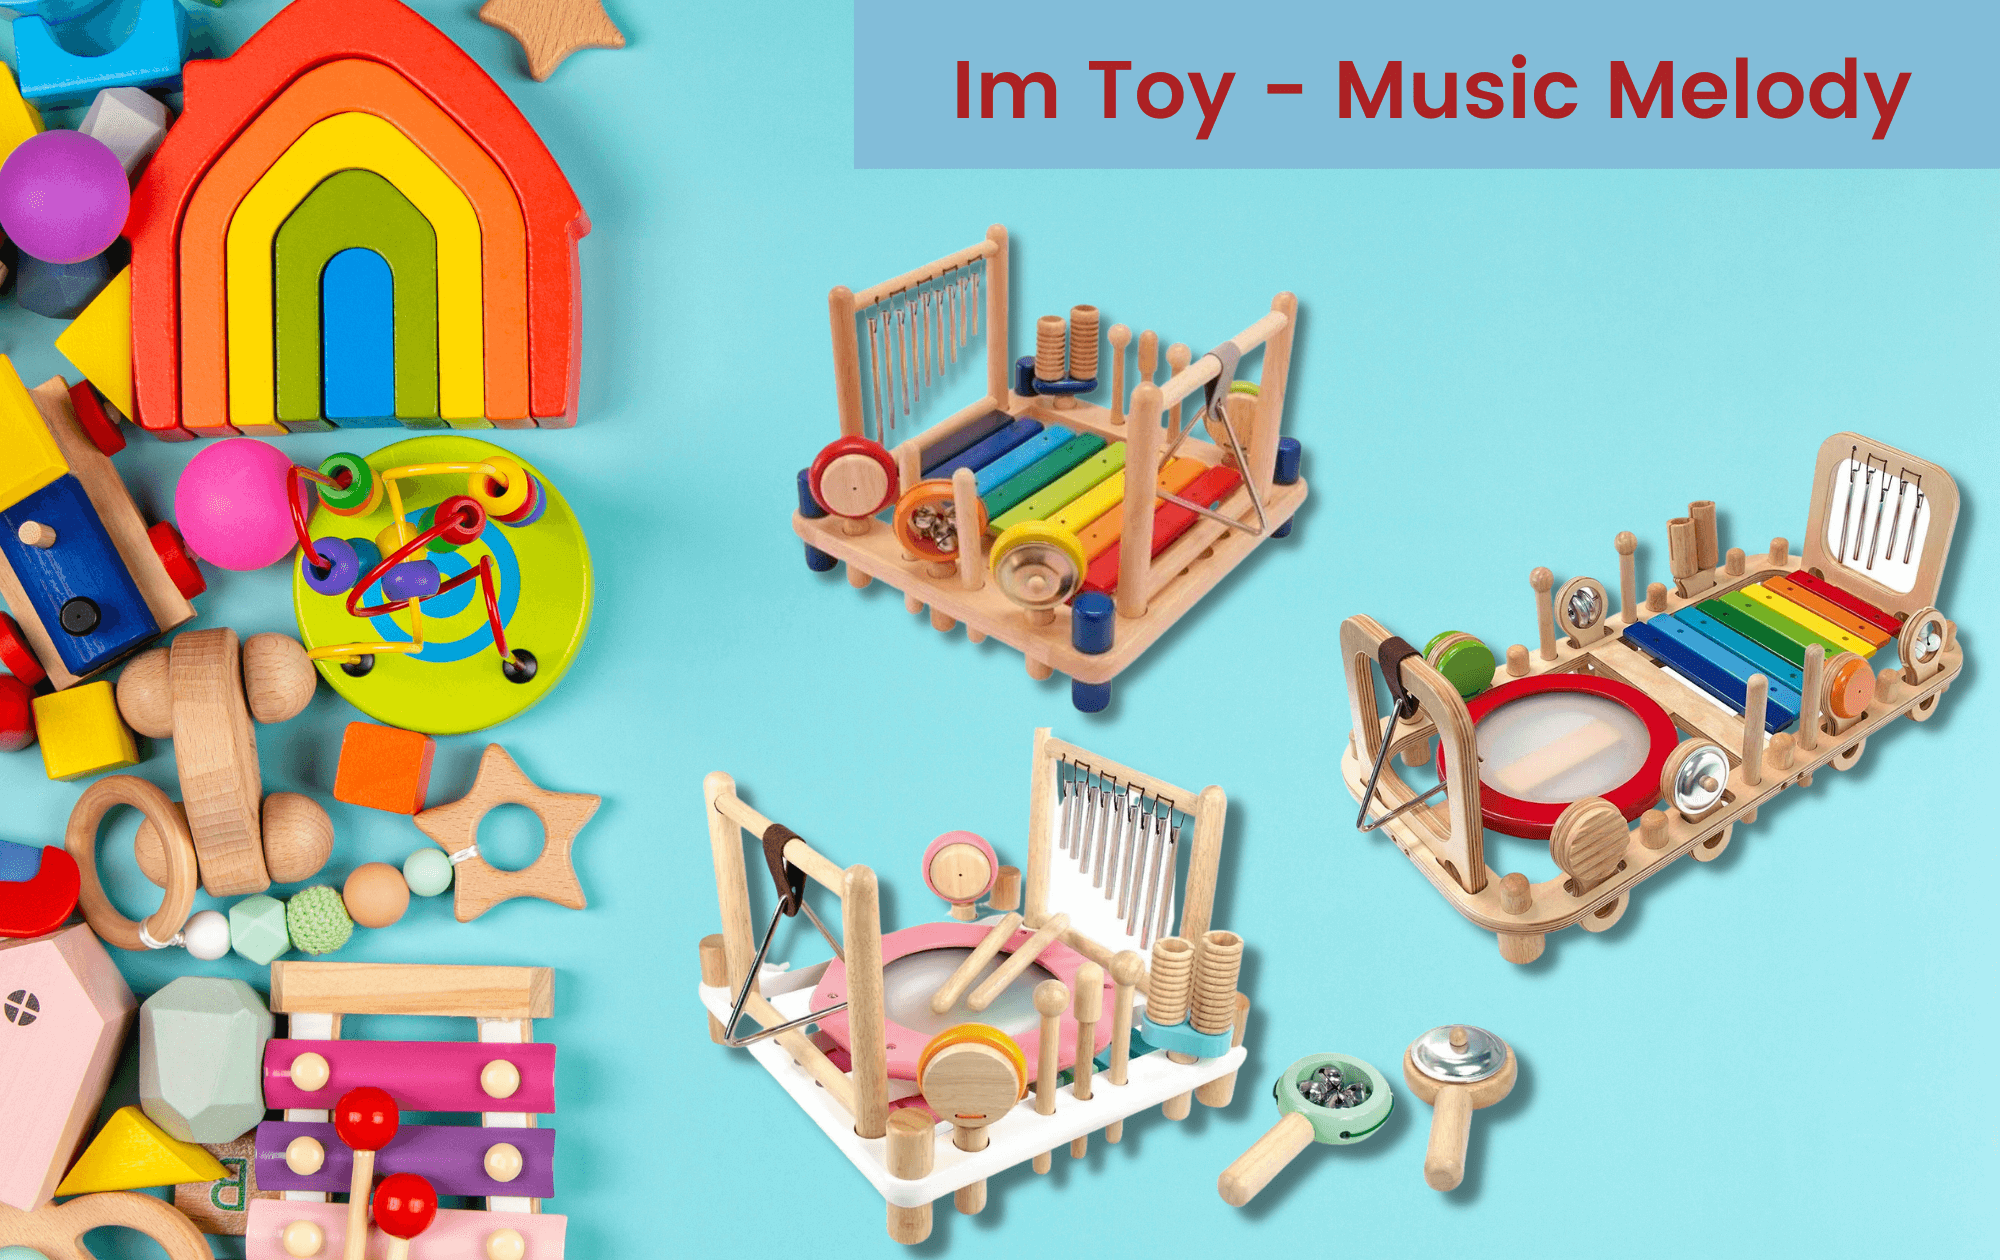 Im Toy - Music Melody